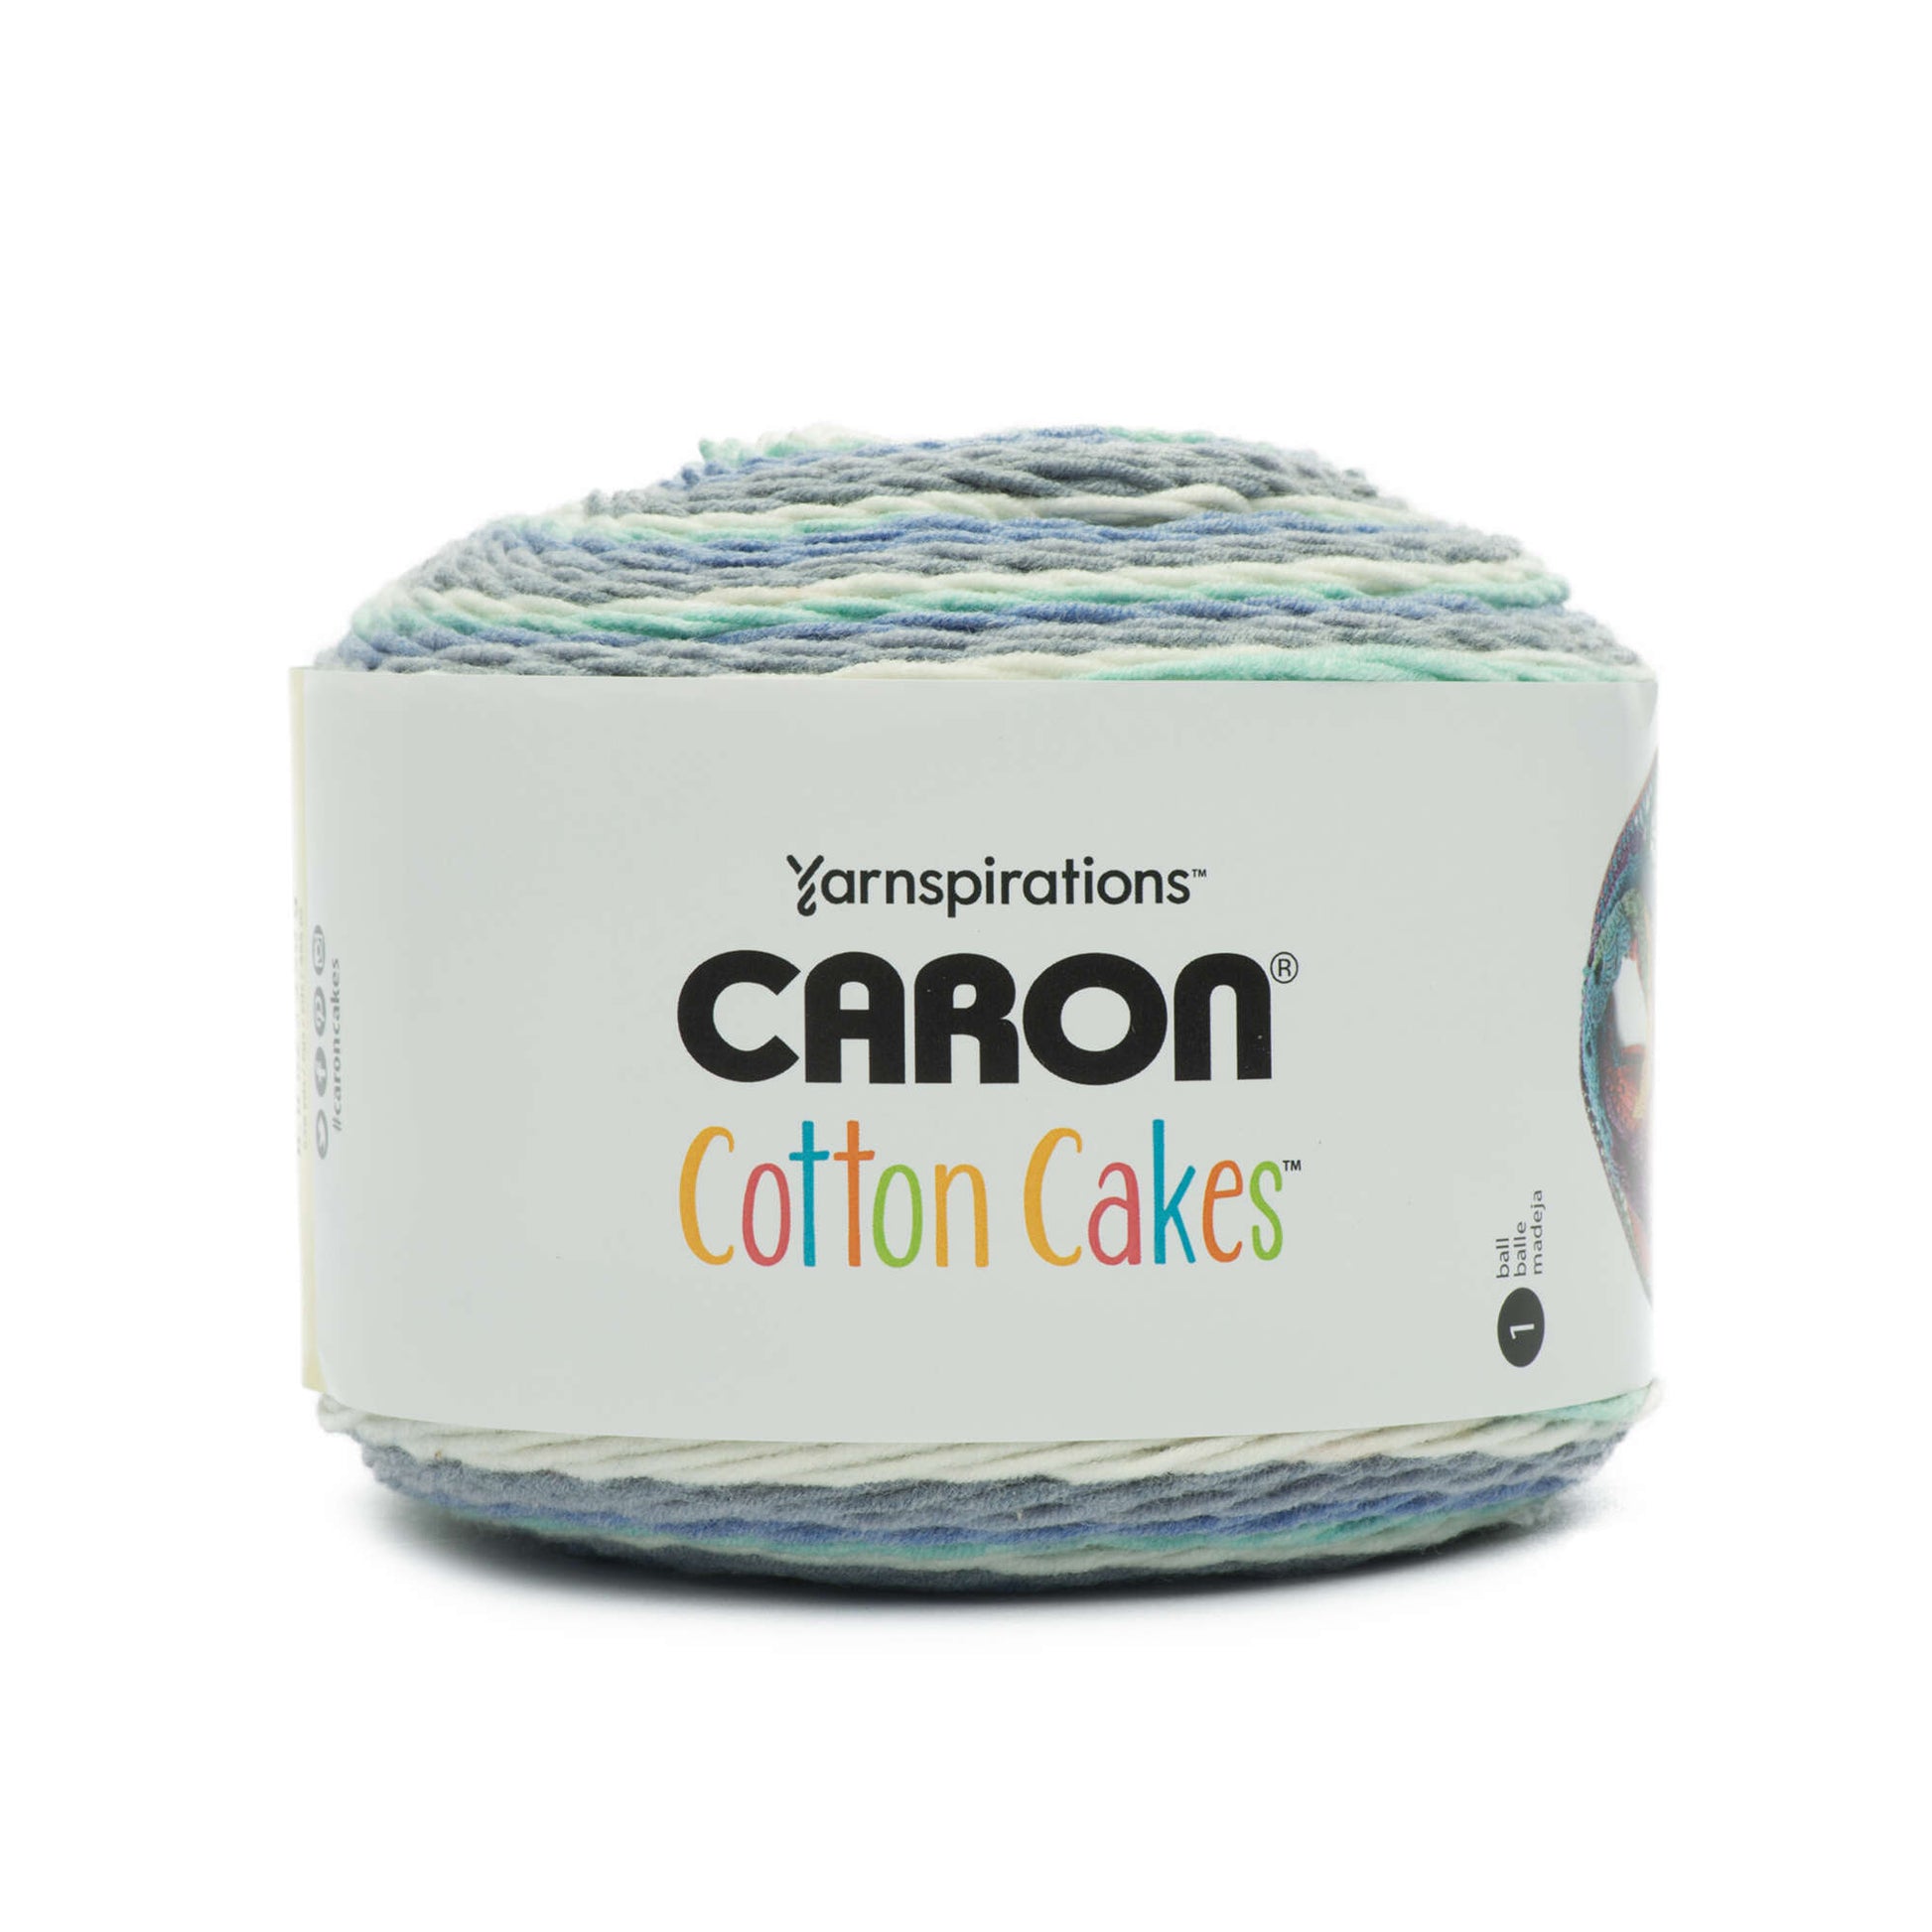 Multi Cotton Yarn Cakes in BLUE WINE, Sport DK Yarn for Crocheting or  Hand-knitting, Yarn Box. 